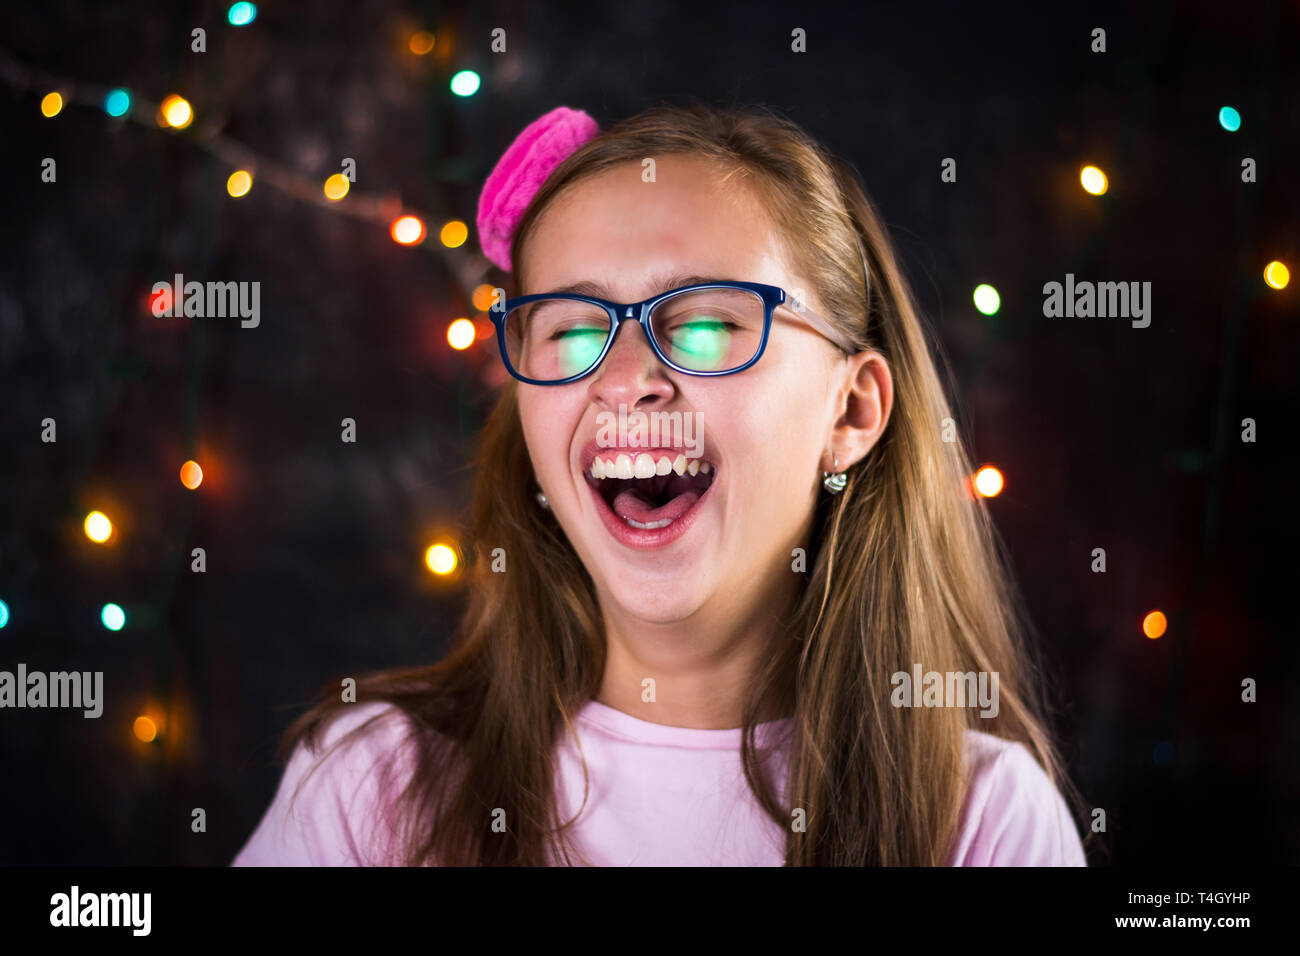 Portrait of cheerful teenage girl against festive background Stock Photo